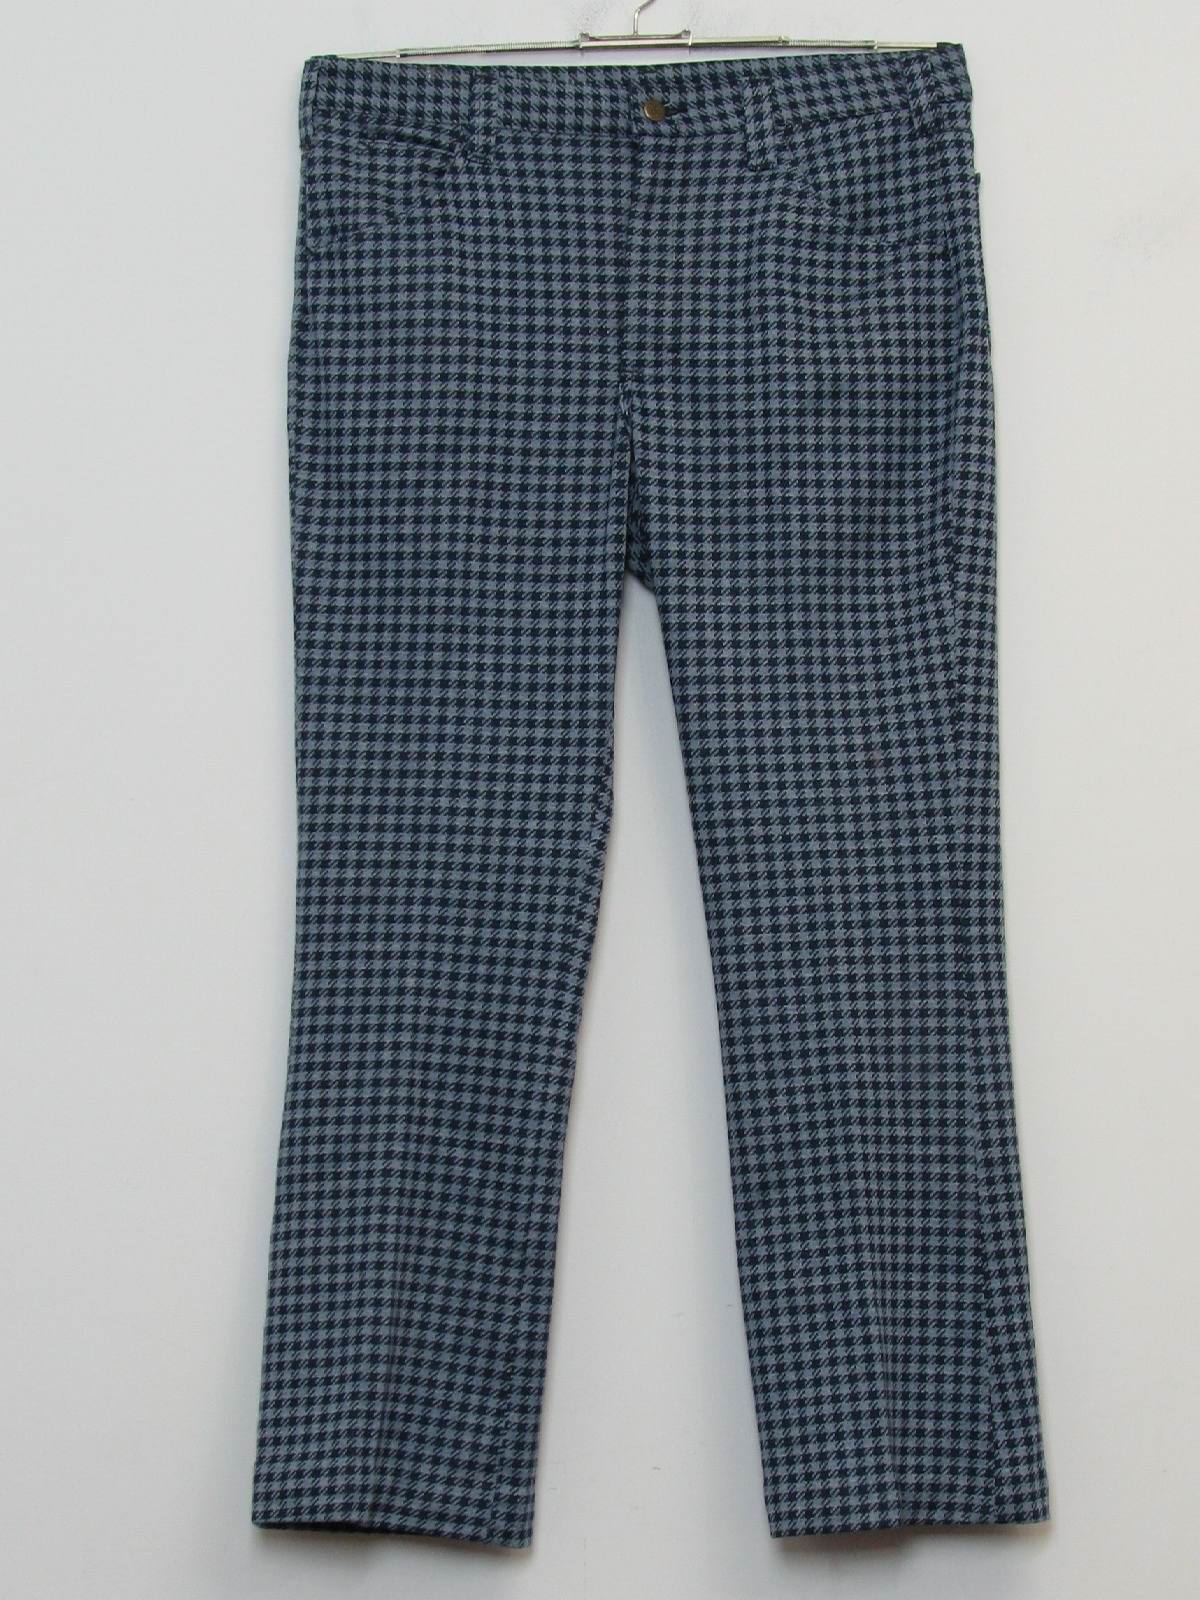 1970's Retro Flared Pants / Flares: 70s -Lee- Mens light grey-blue ...